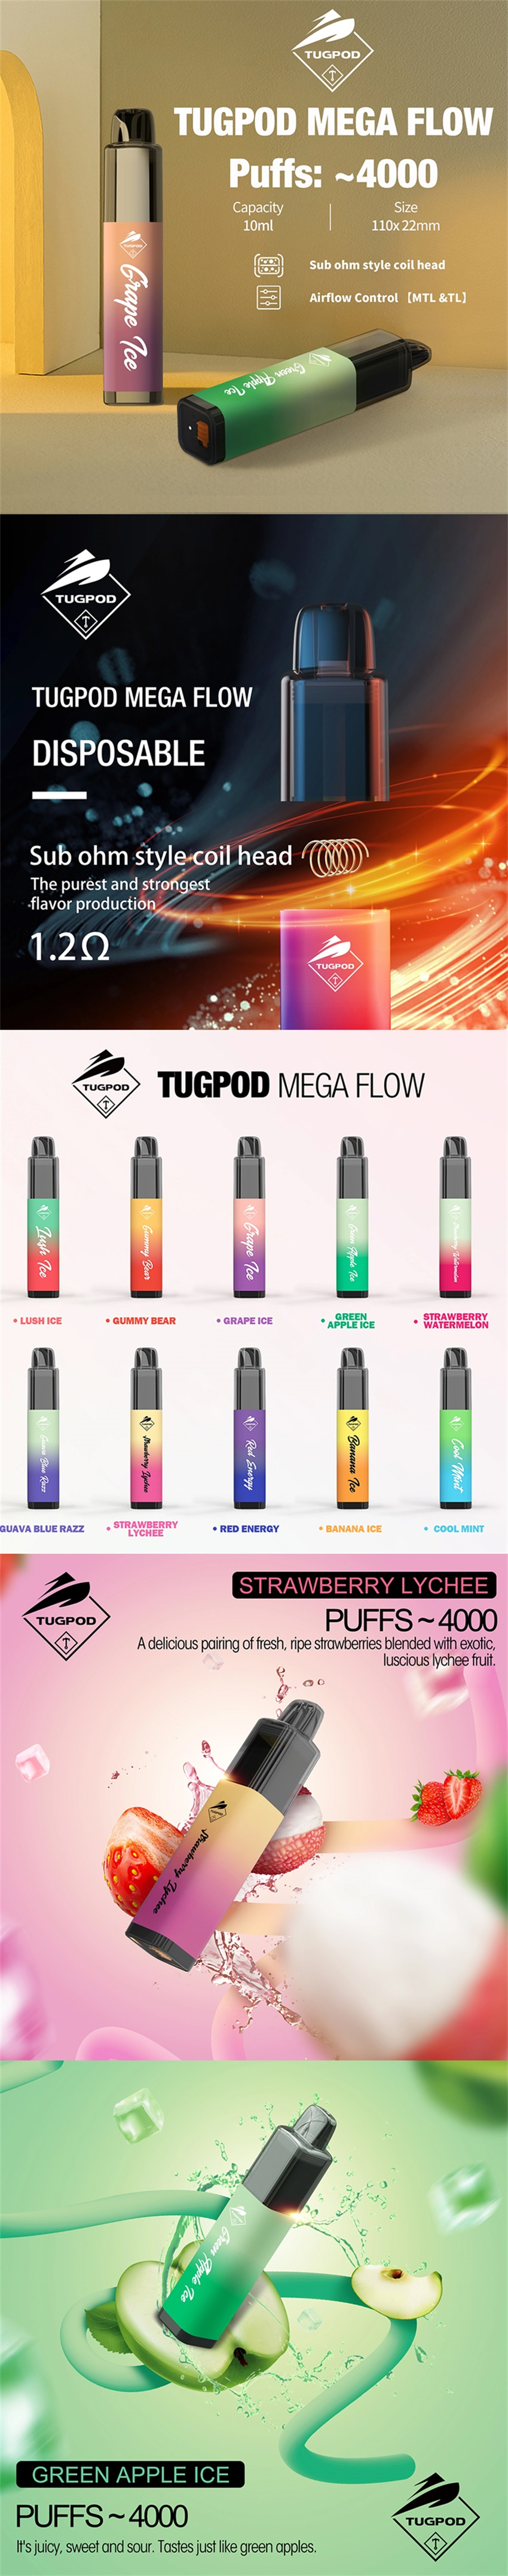 Tugpod Mega Flow